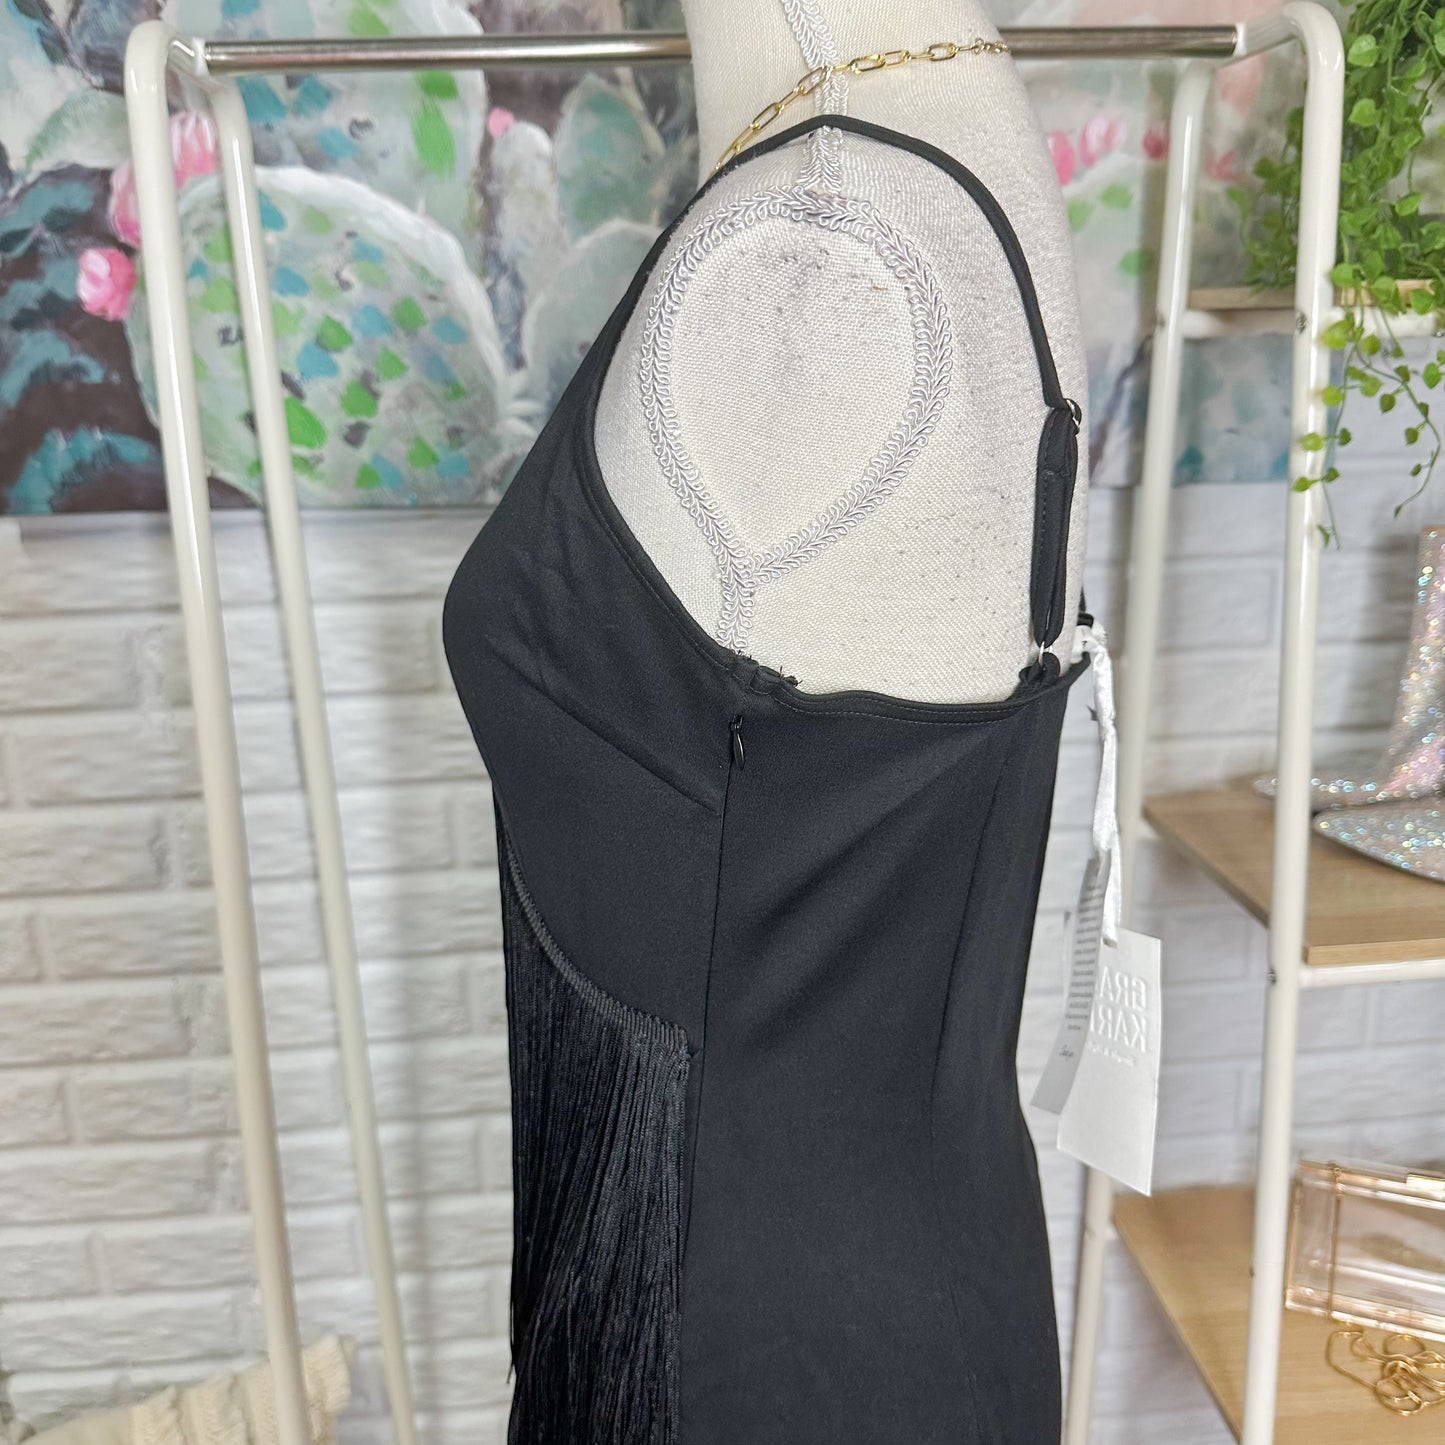 Grace Karin Black Fringe Bodycon Dress Size Medium